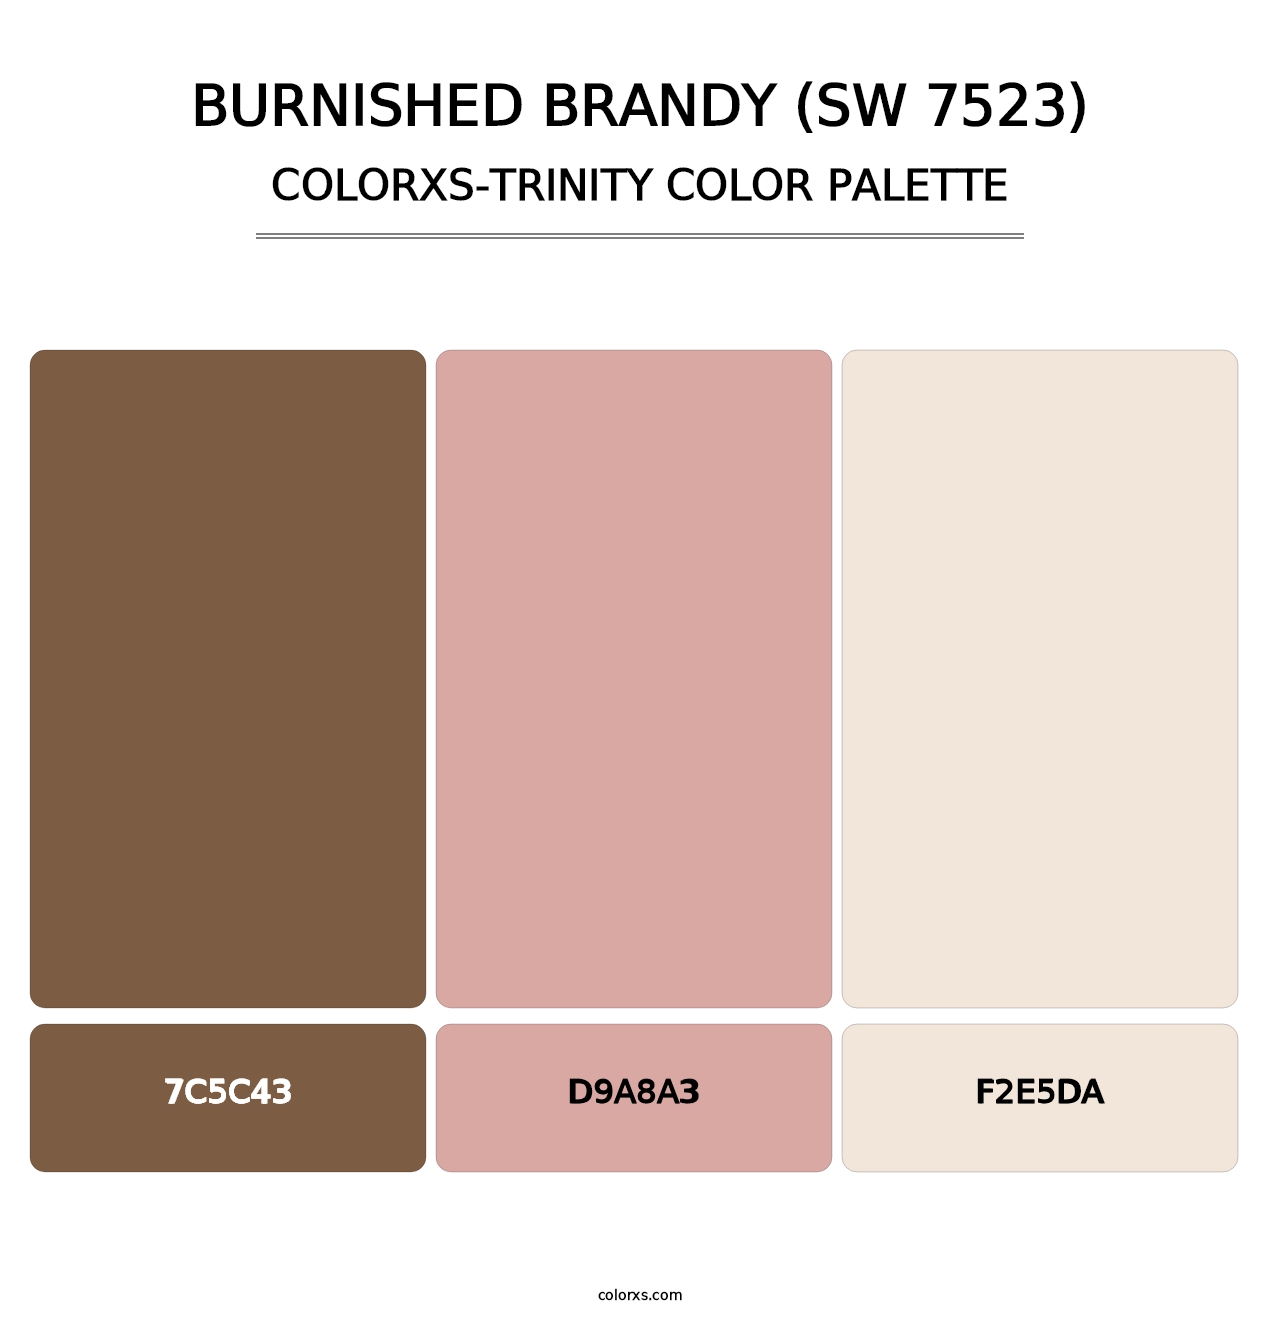 Burnished Brandy (SW 7523) - Colorxs Trinity Palette